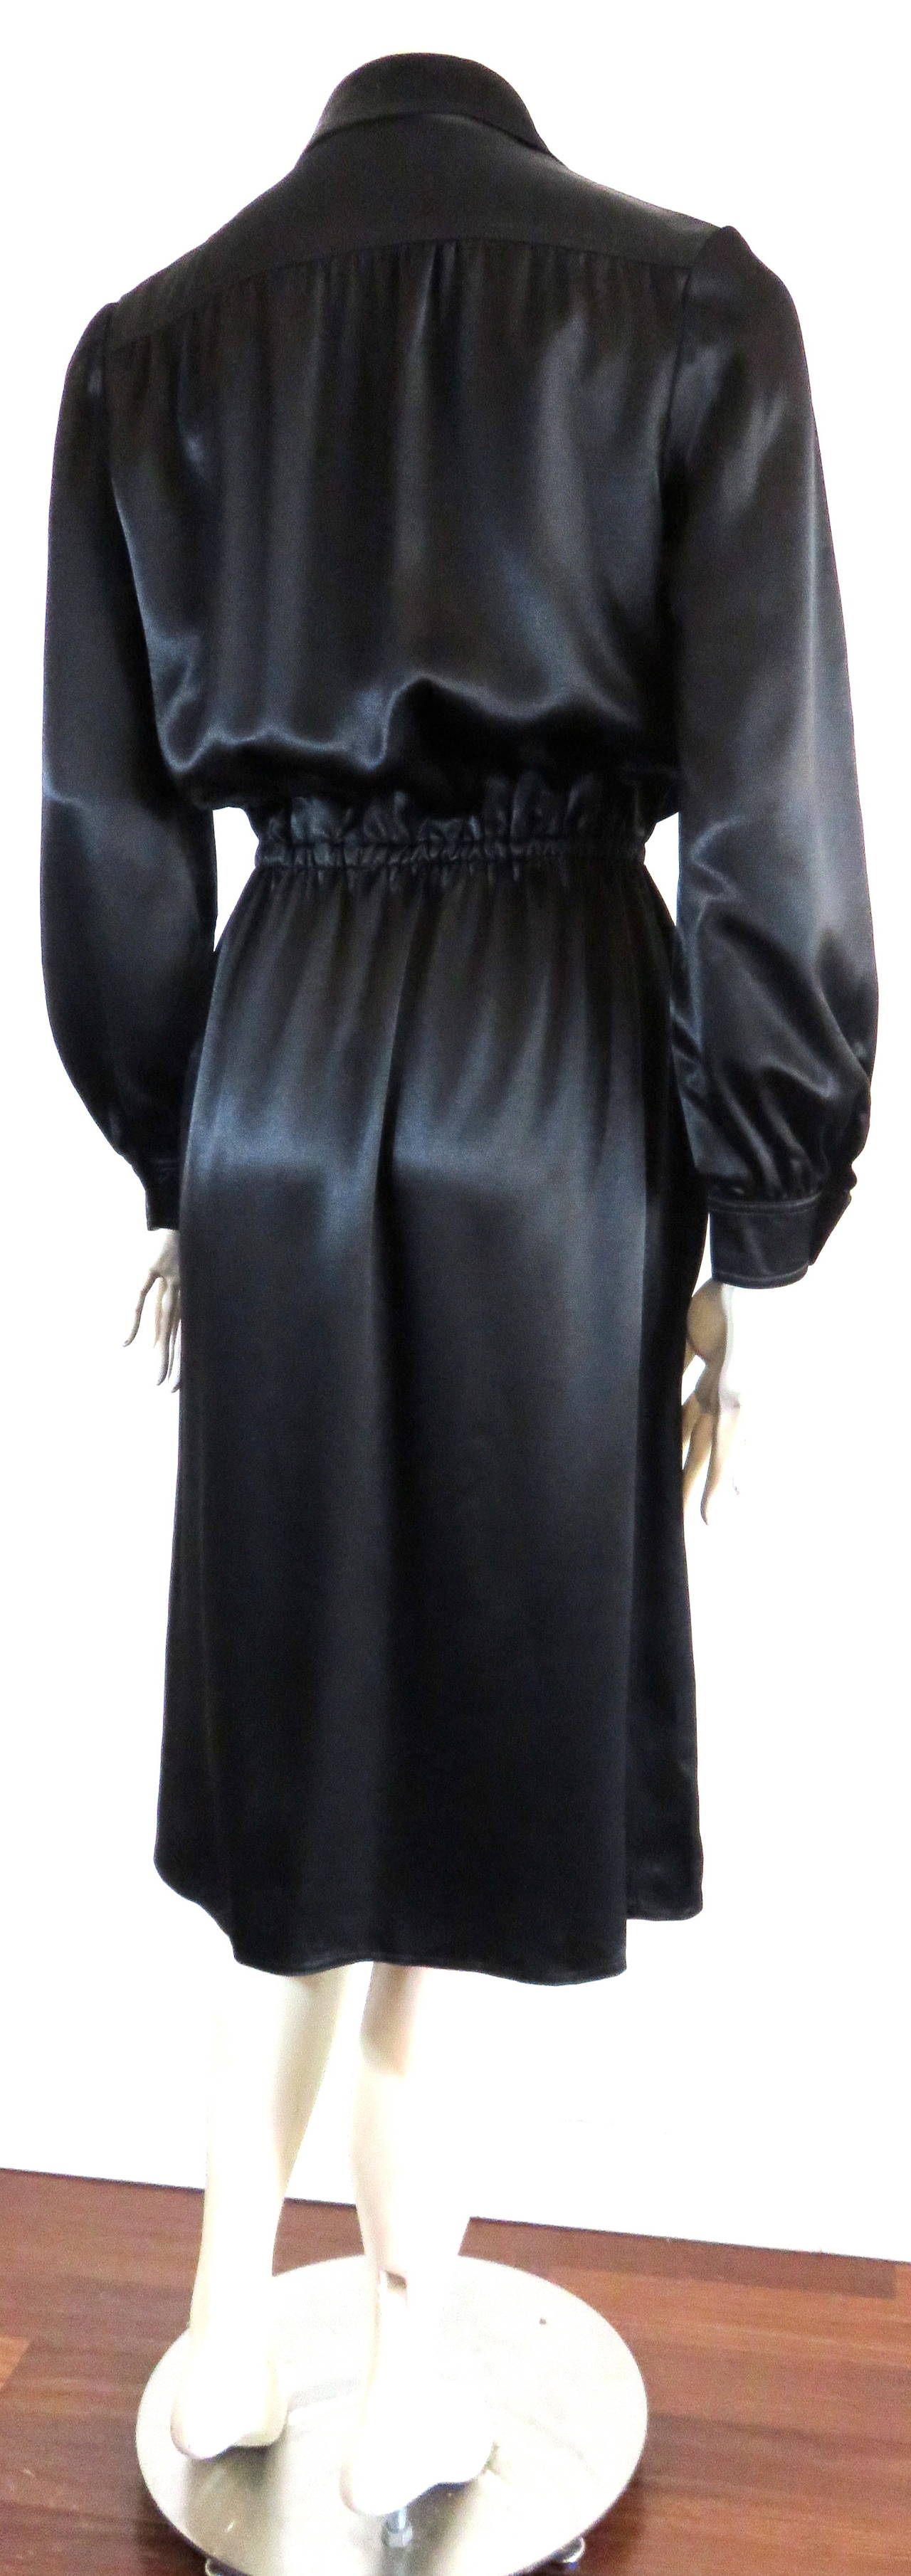 1970's ALBERT CAPRARO Crystal zipper dress never worn 2